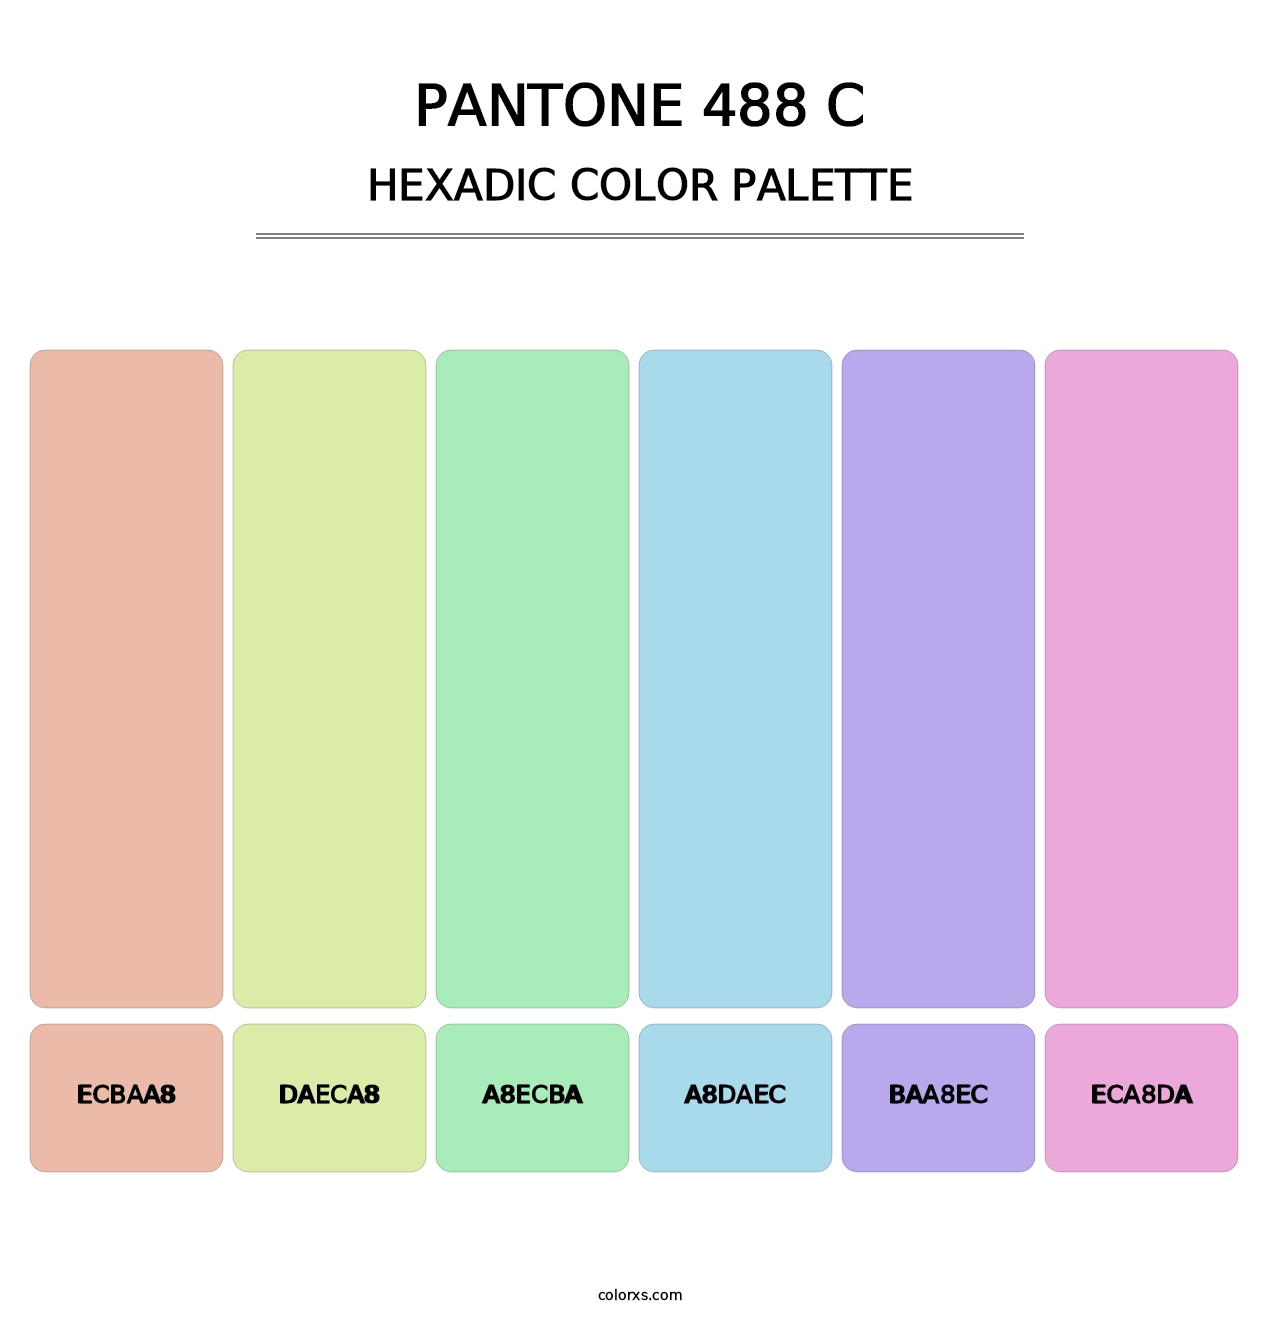 PANTONE 488 C - Hexadic Color Palette